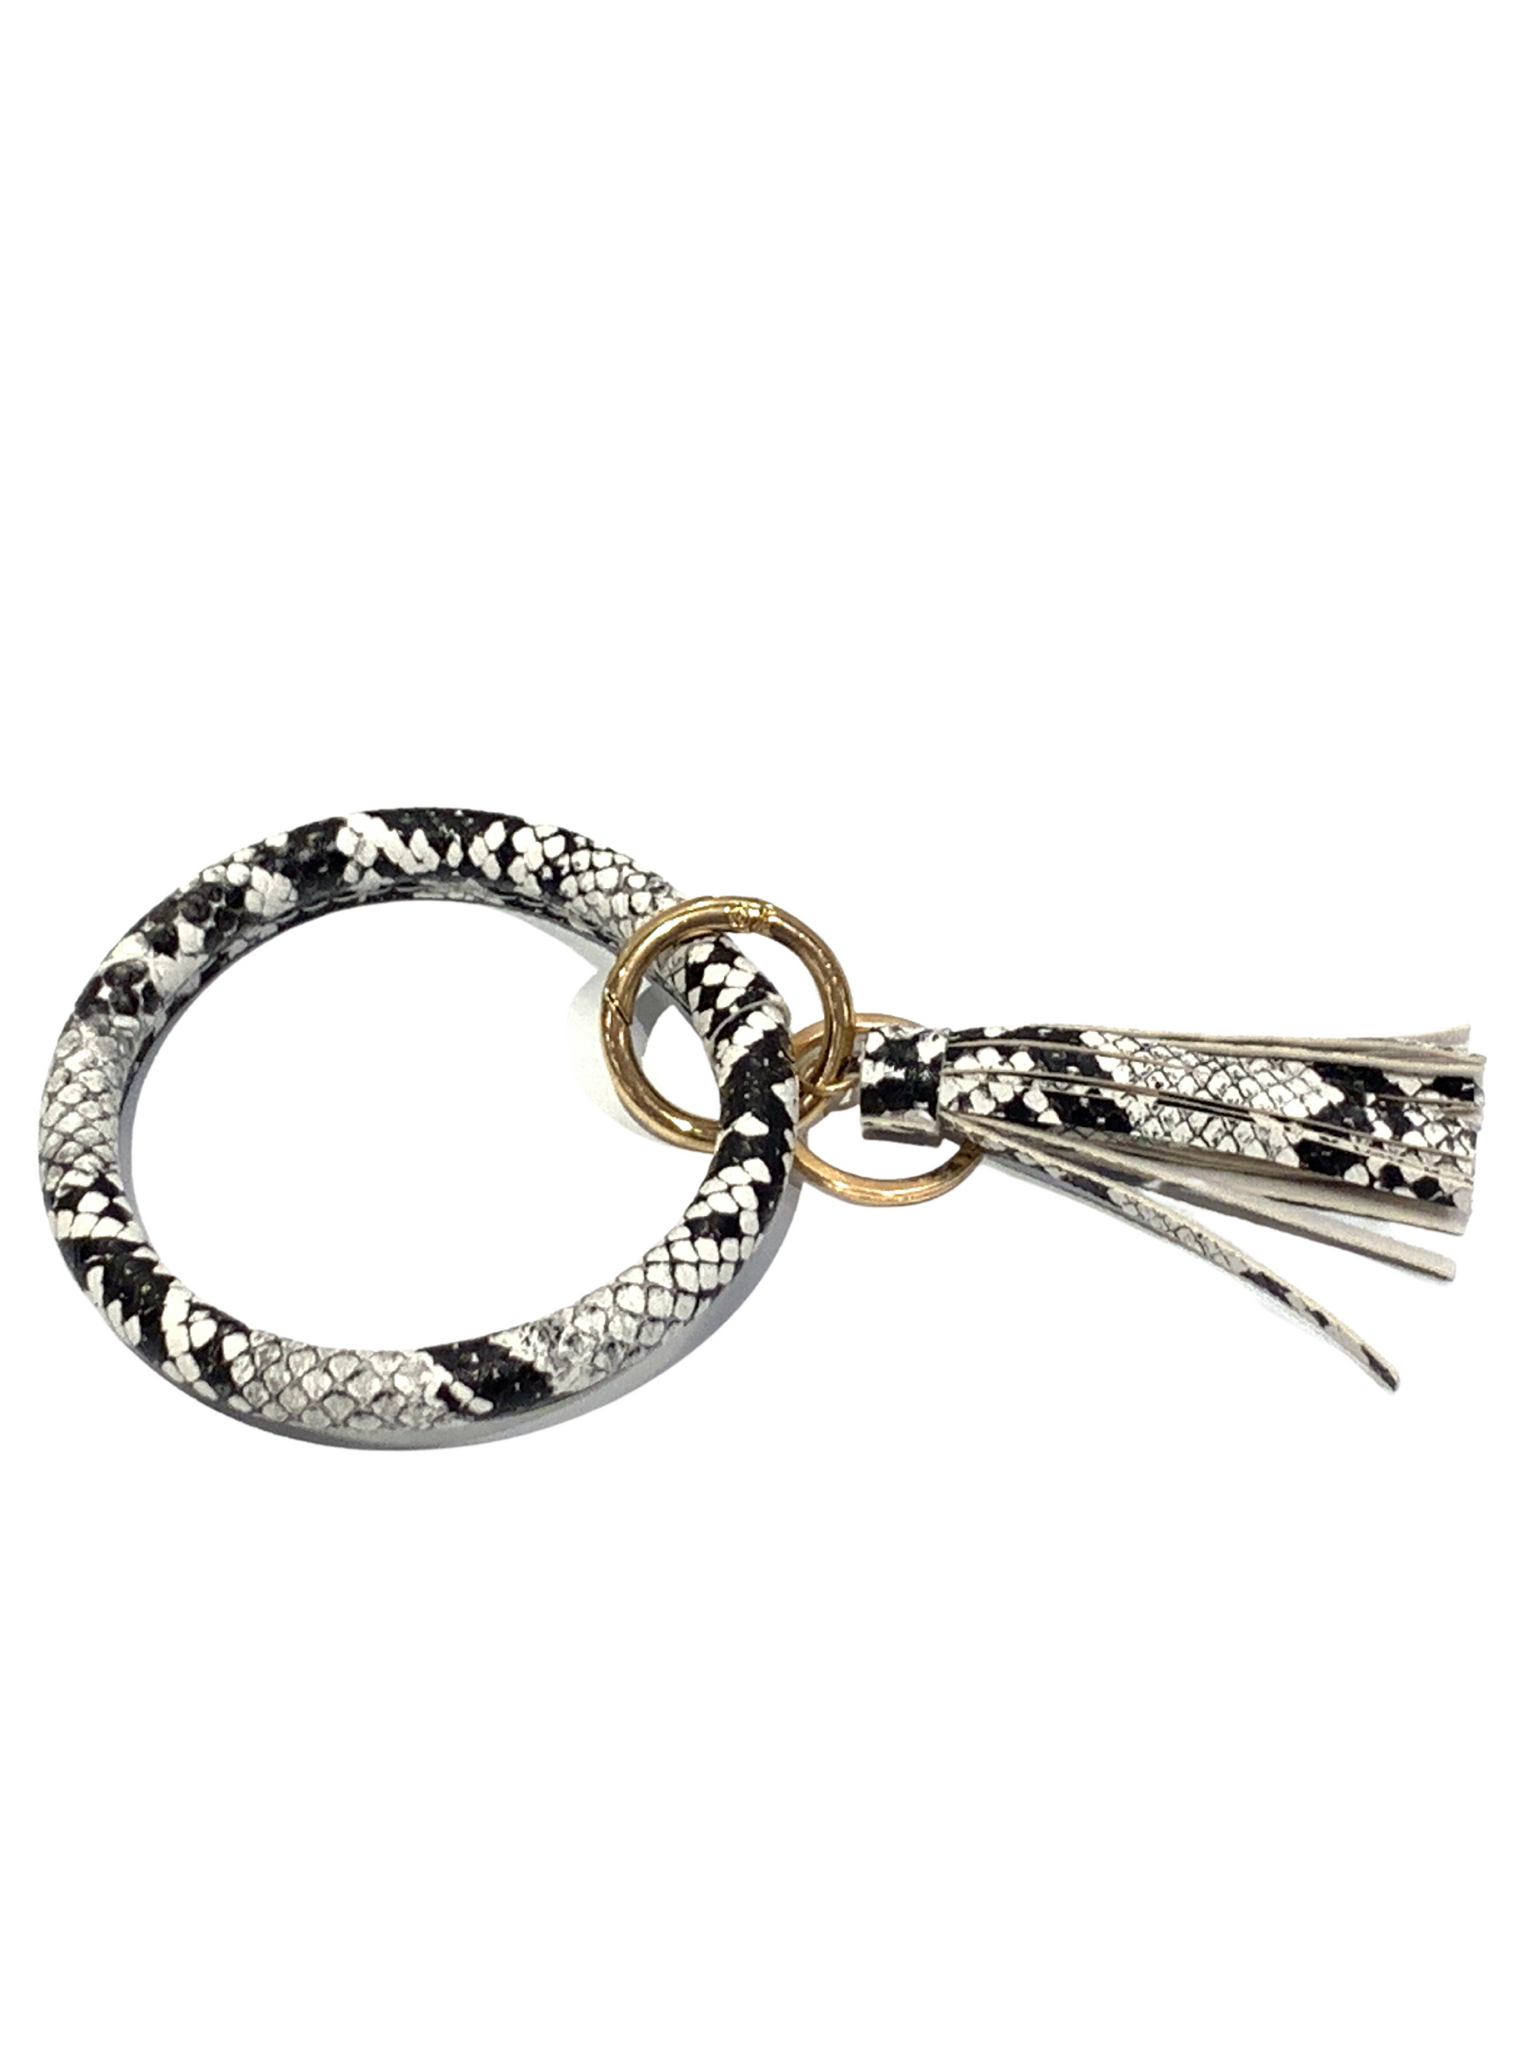 Luxury Animal Print Keyring, Bracelet Key Chain, Key Ring Bangle - touchofsouth